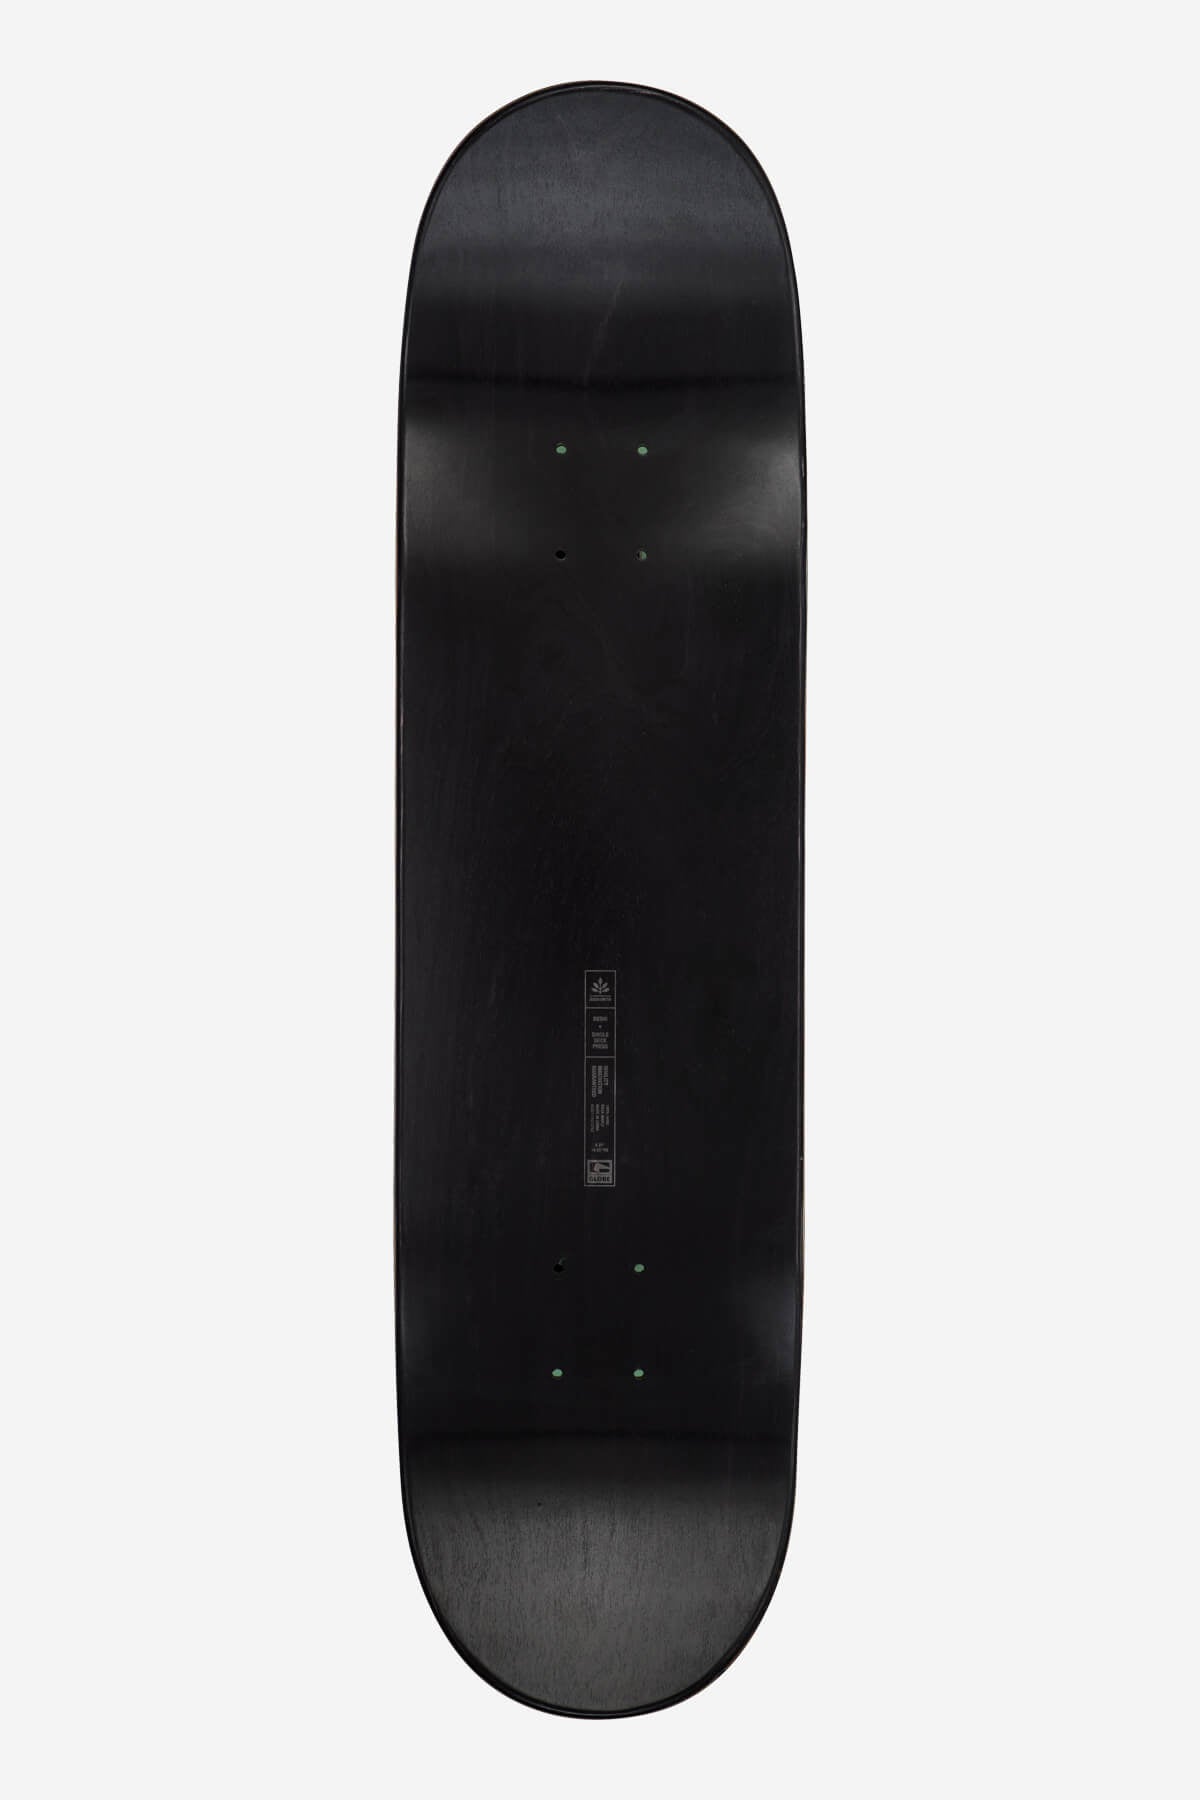 Globe - G1 Lineform 2 - Menthe - 8.25" Skateboard Deck